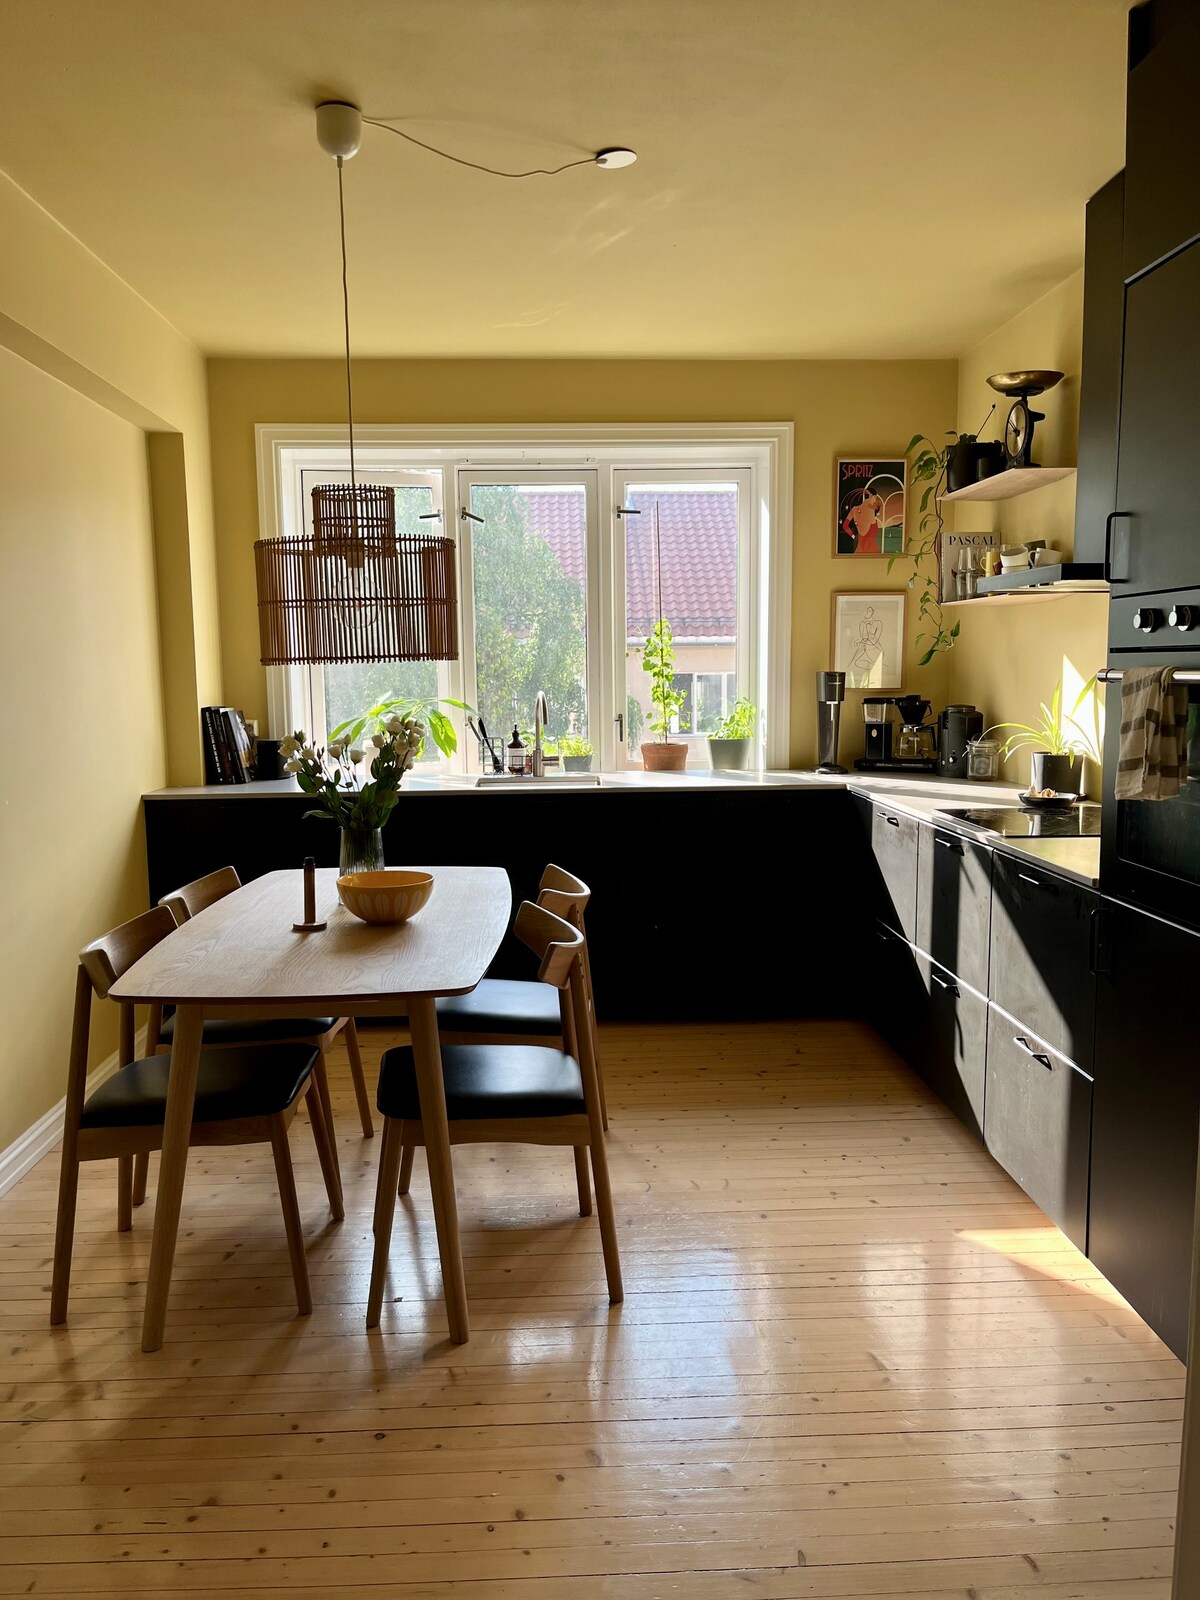 3-roms leilighet på St.Hanshaugen